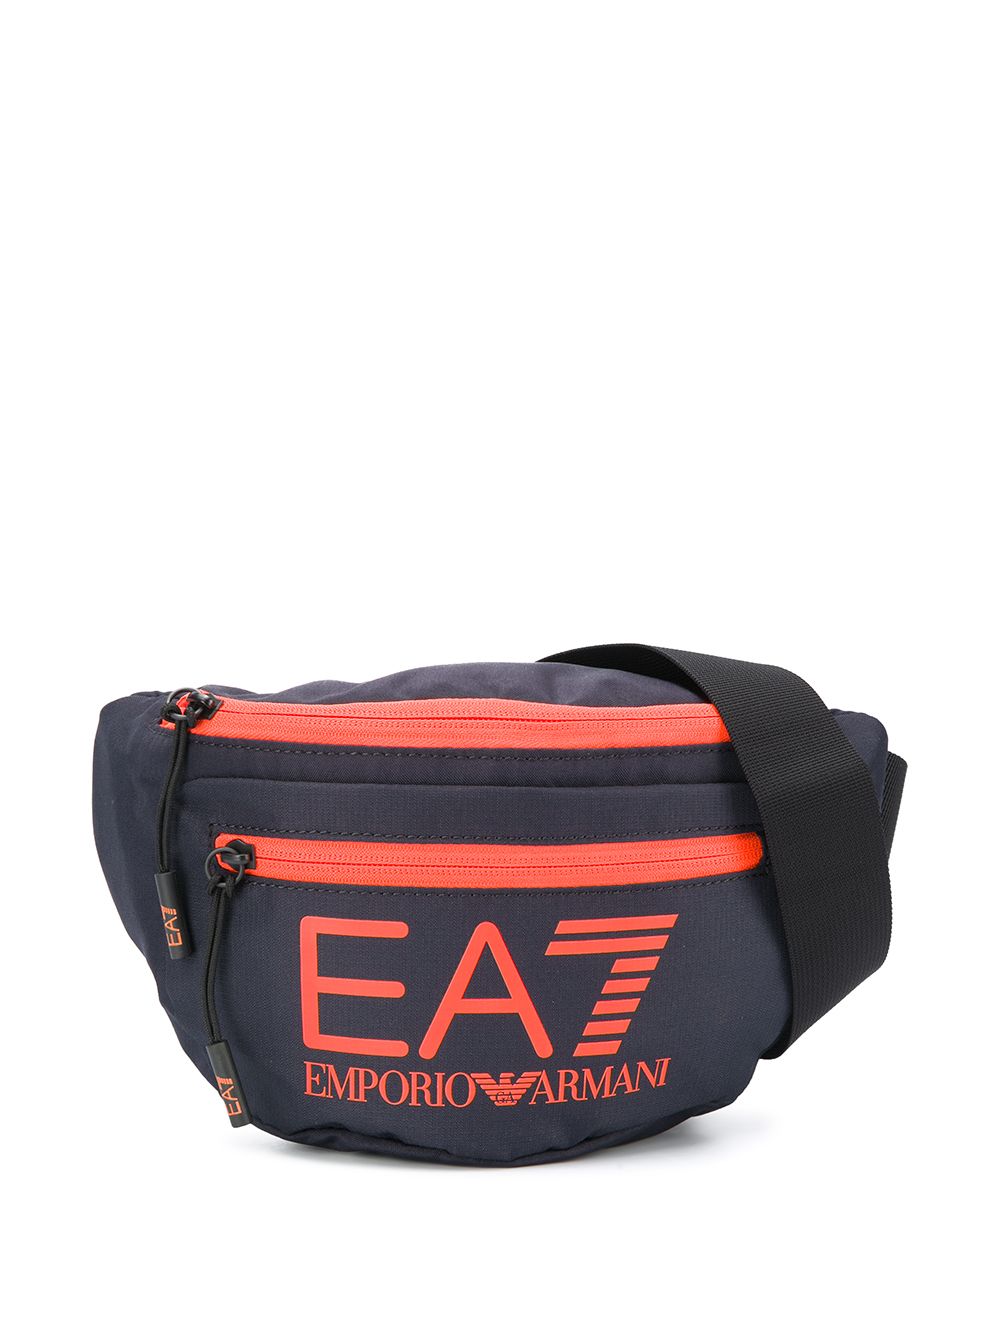 фото Ea7 emporio armani поясная сумка с логотипом